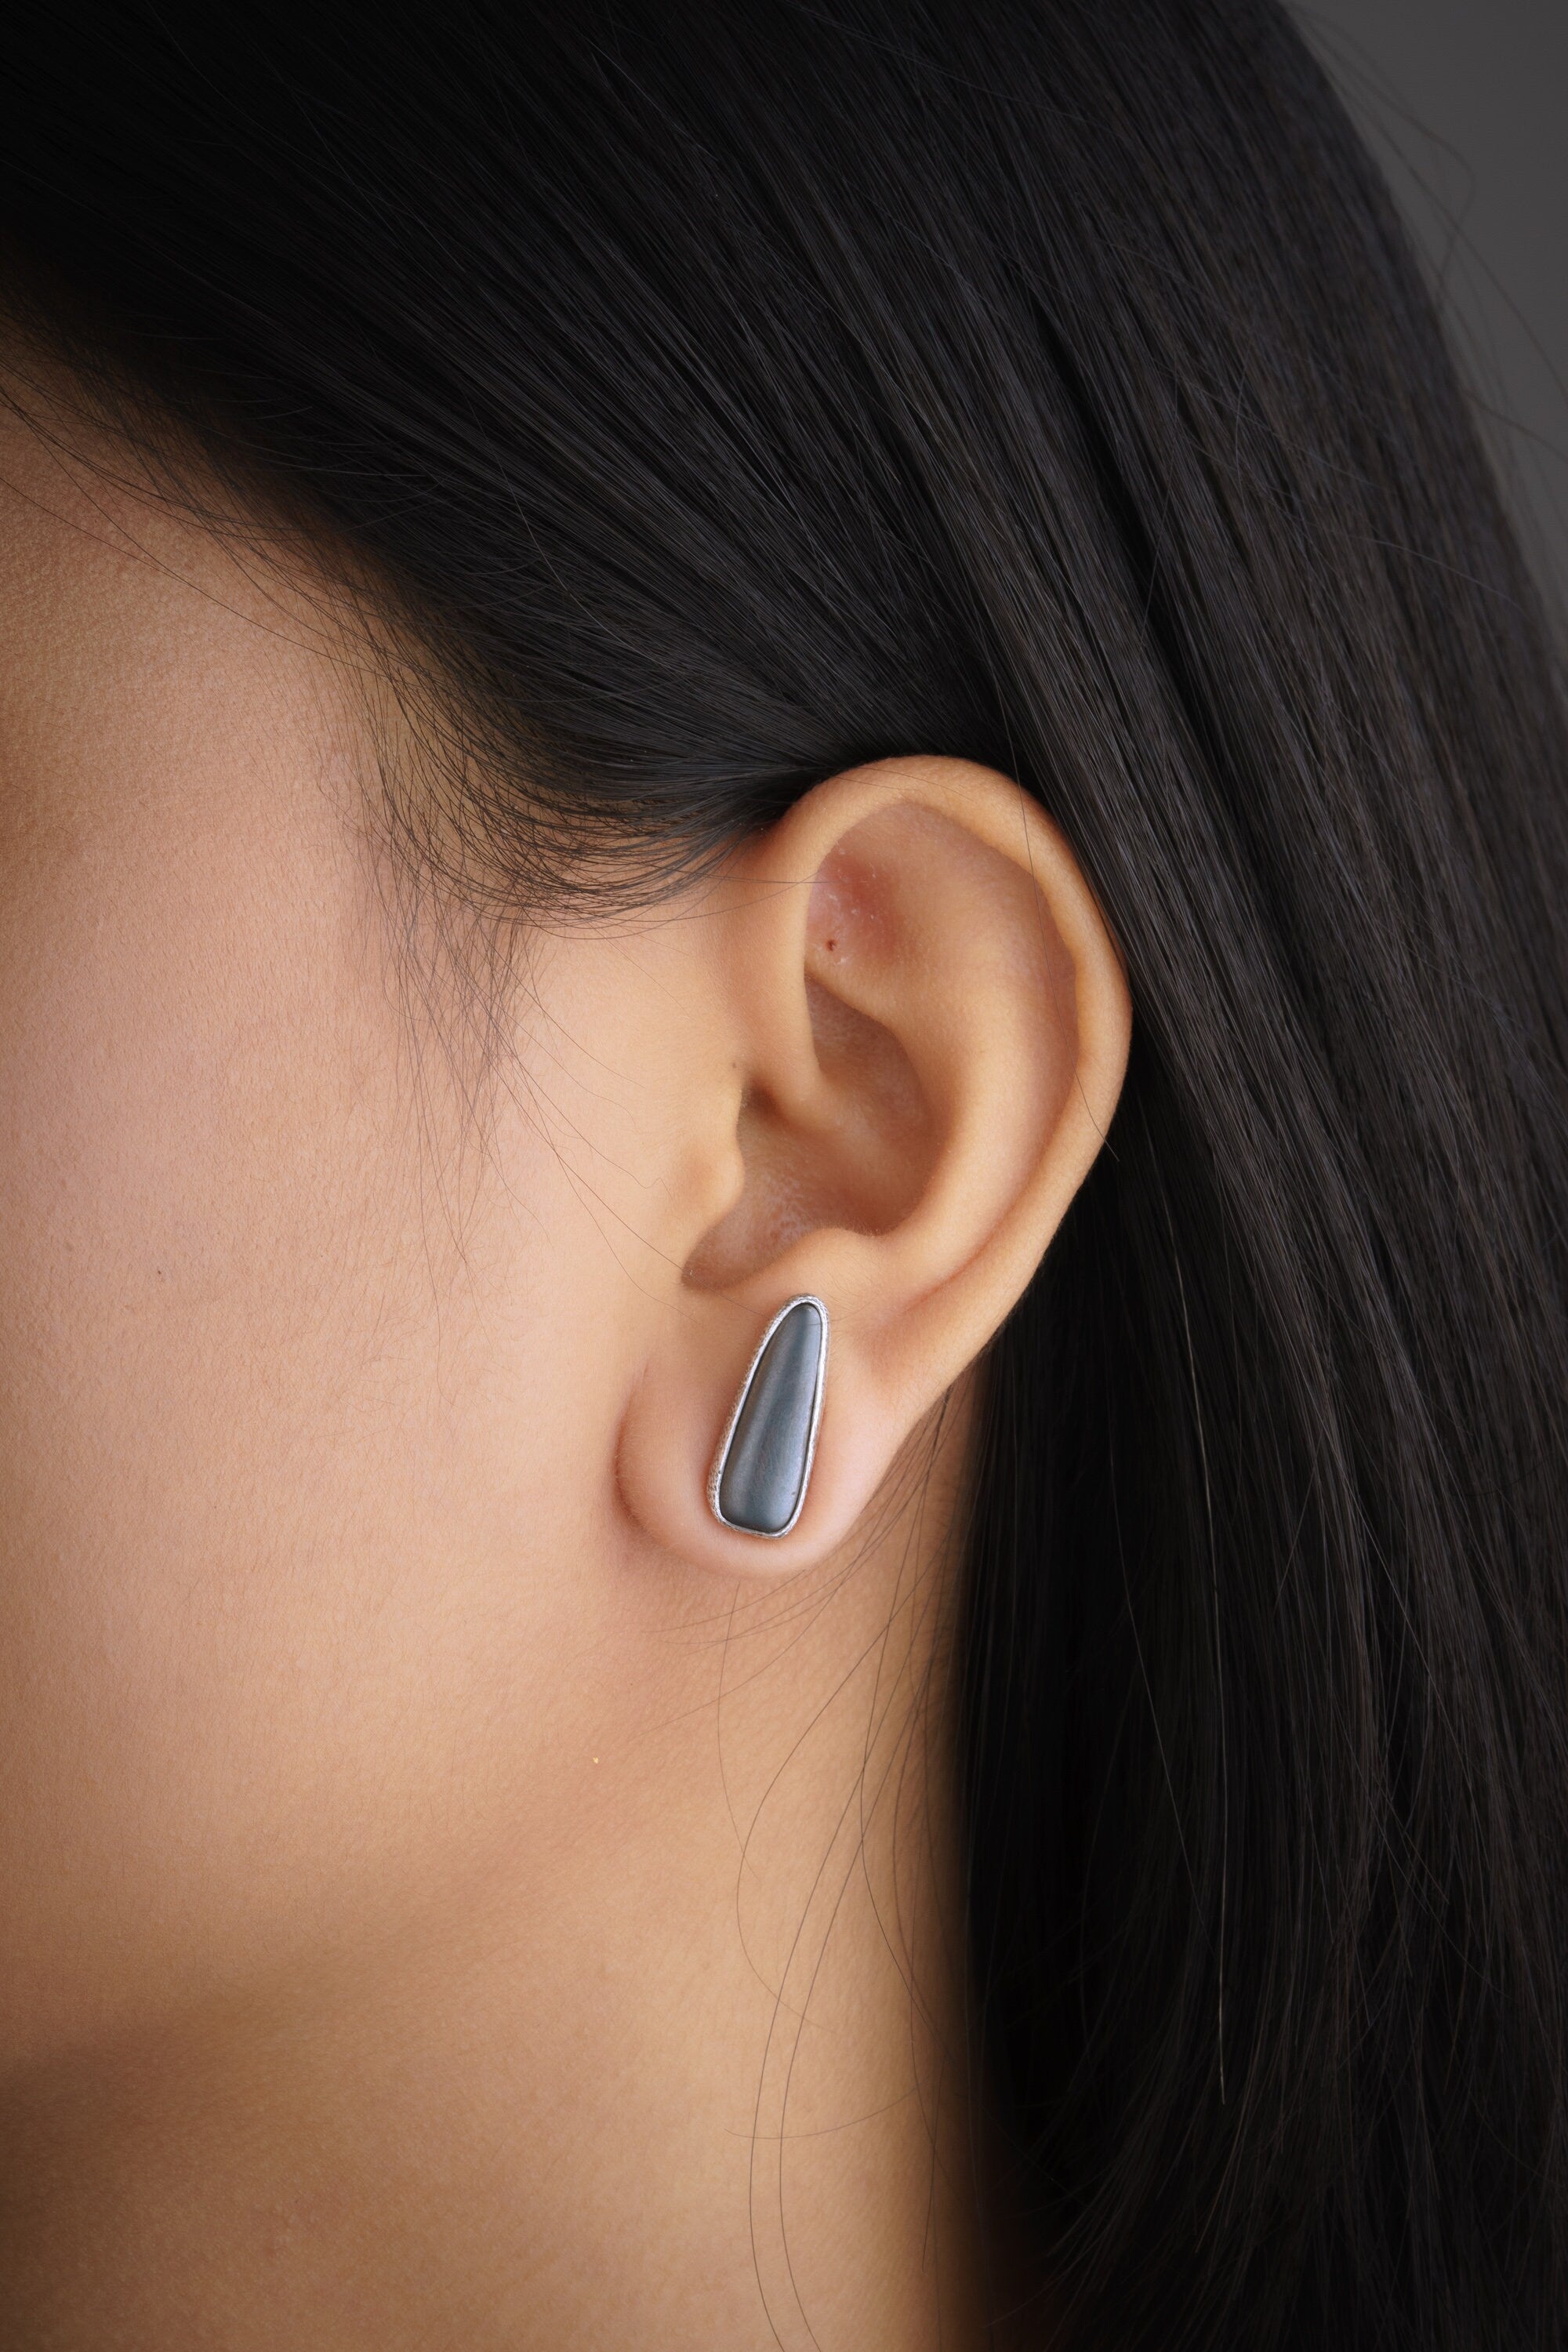 Hematite Stud- Textured Finish - organic shaped Pair - Sterling Silver - Freeform Earring Studs